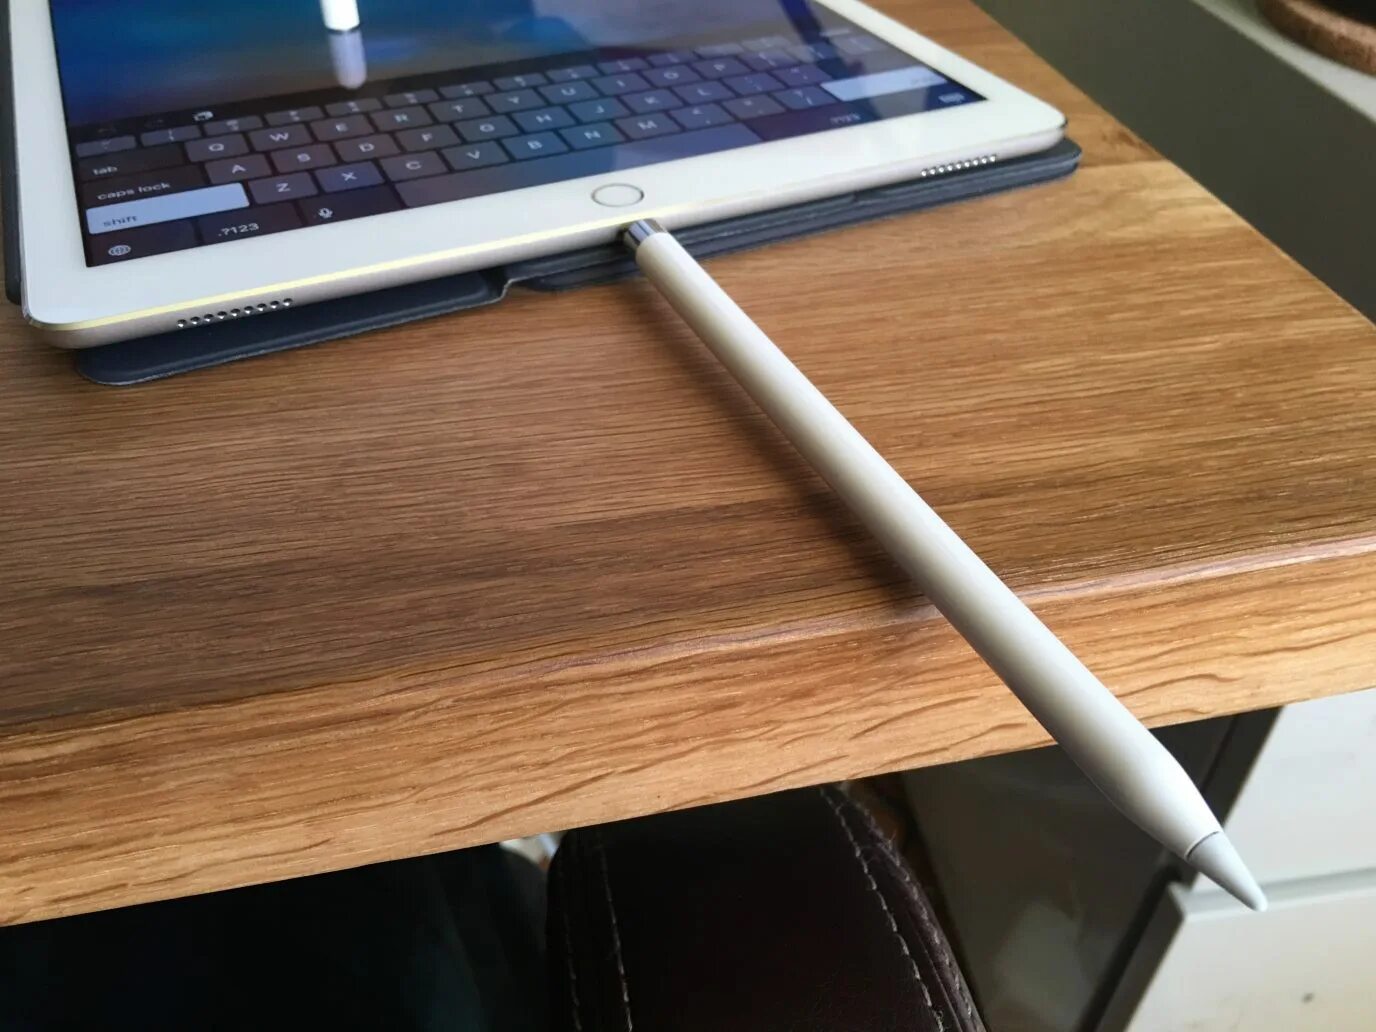 IPAD Apple Pencil 1. Стилус Apple Pencil. Стилус Apple 1 поколения. Apple Pencil 1 заряжается.